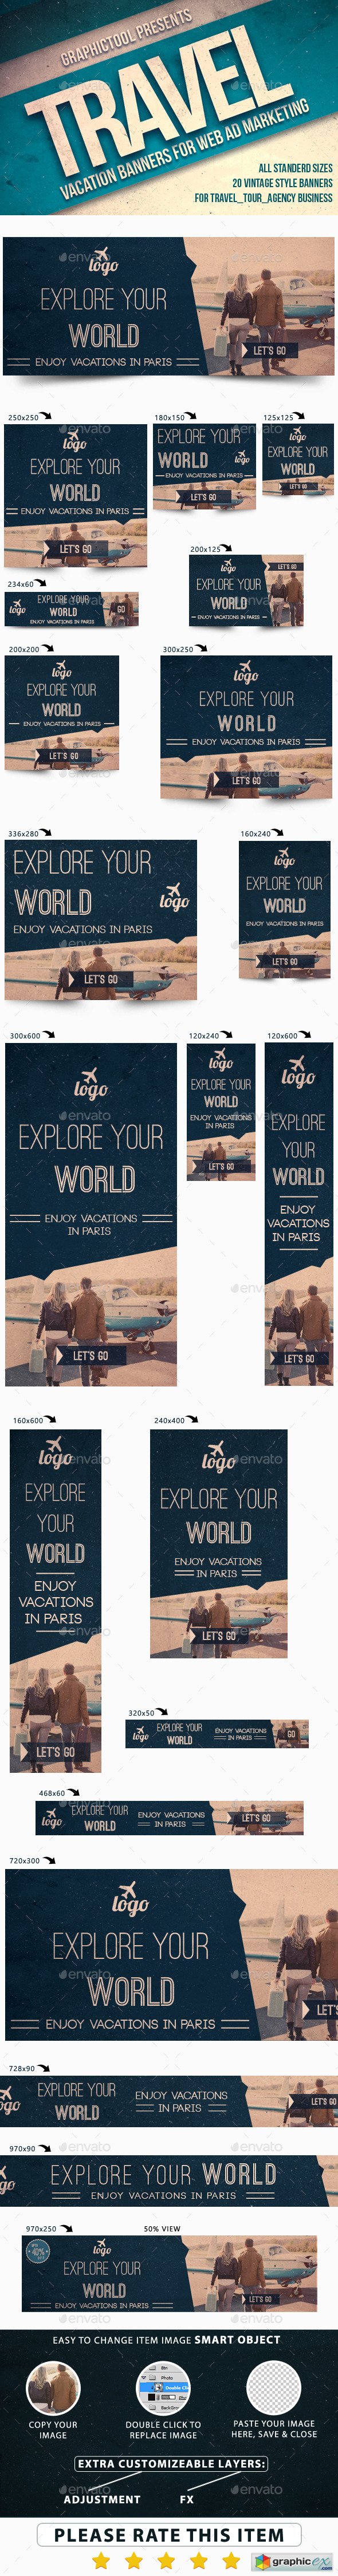 Vintage Travel Web Ad Marketing Banners